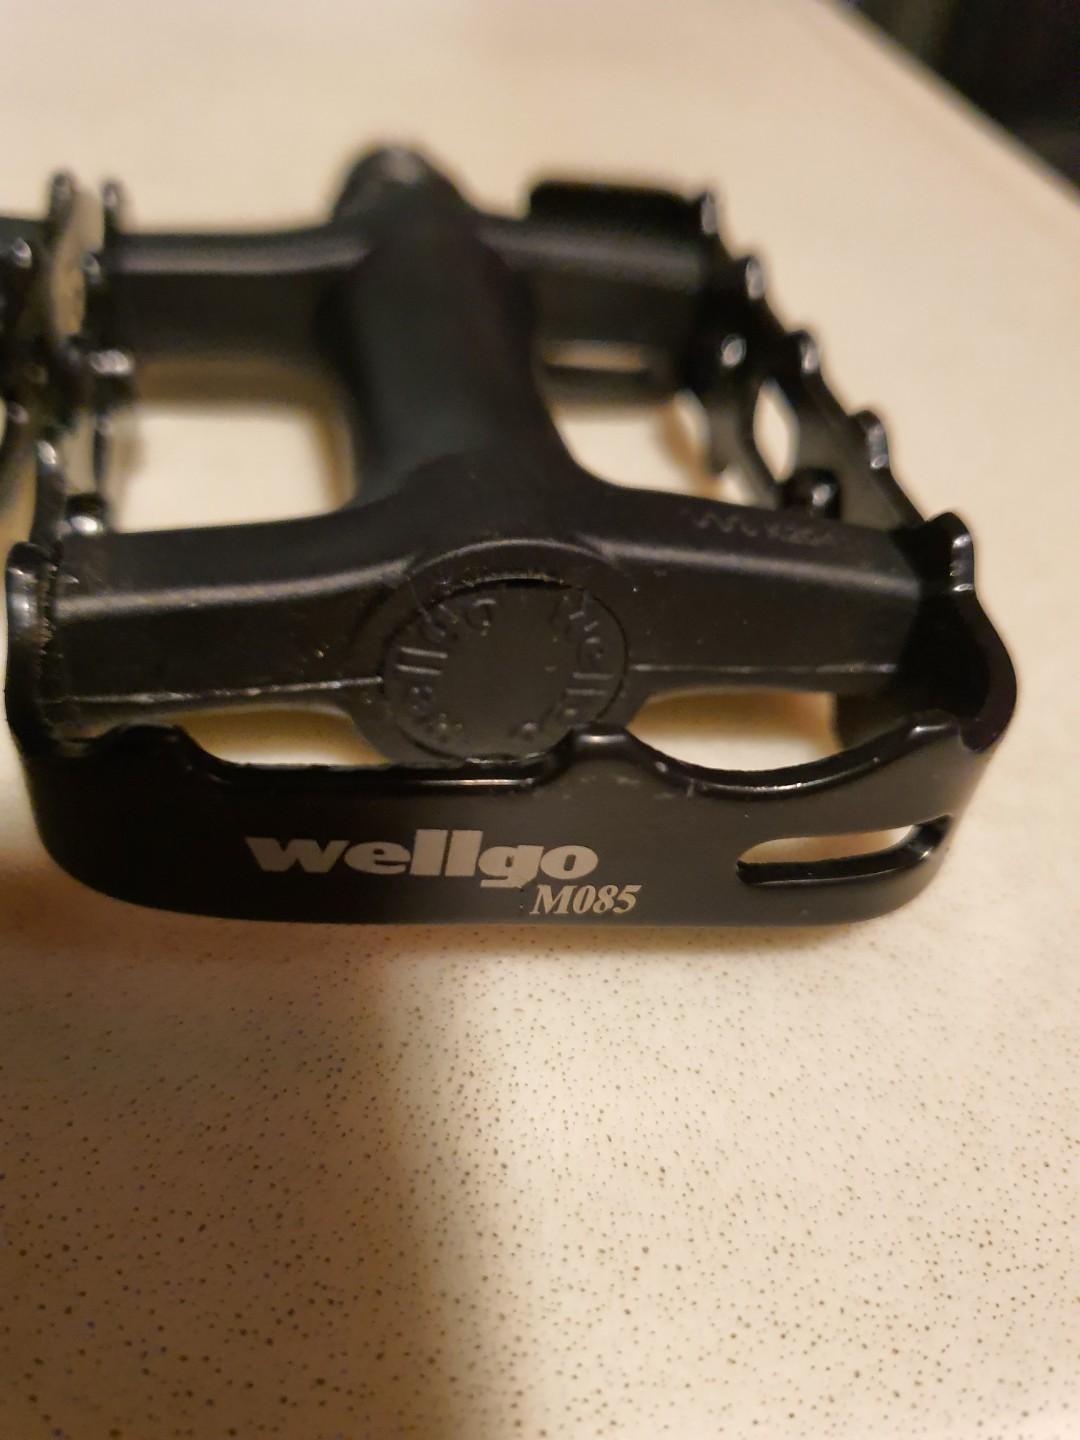 wellgo m085 pedals